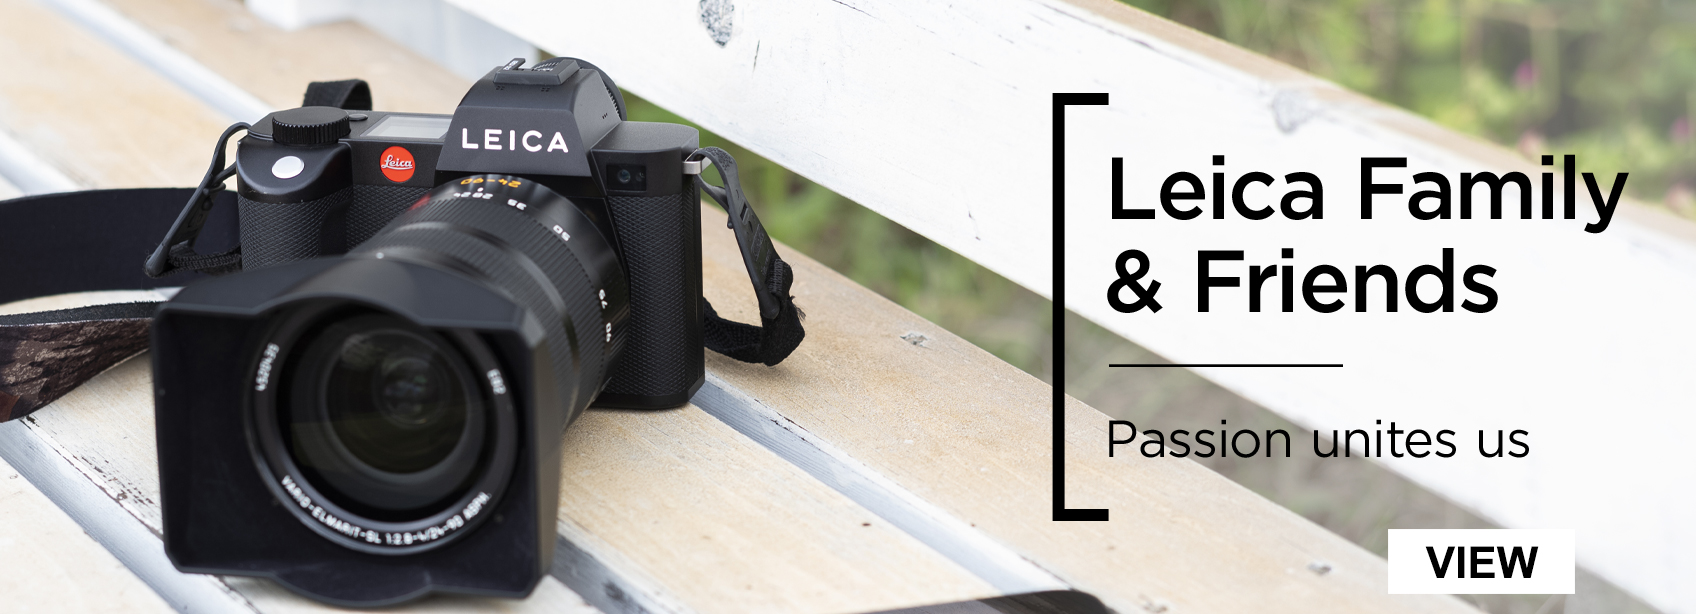 Leica Family & Friends Passion unites us